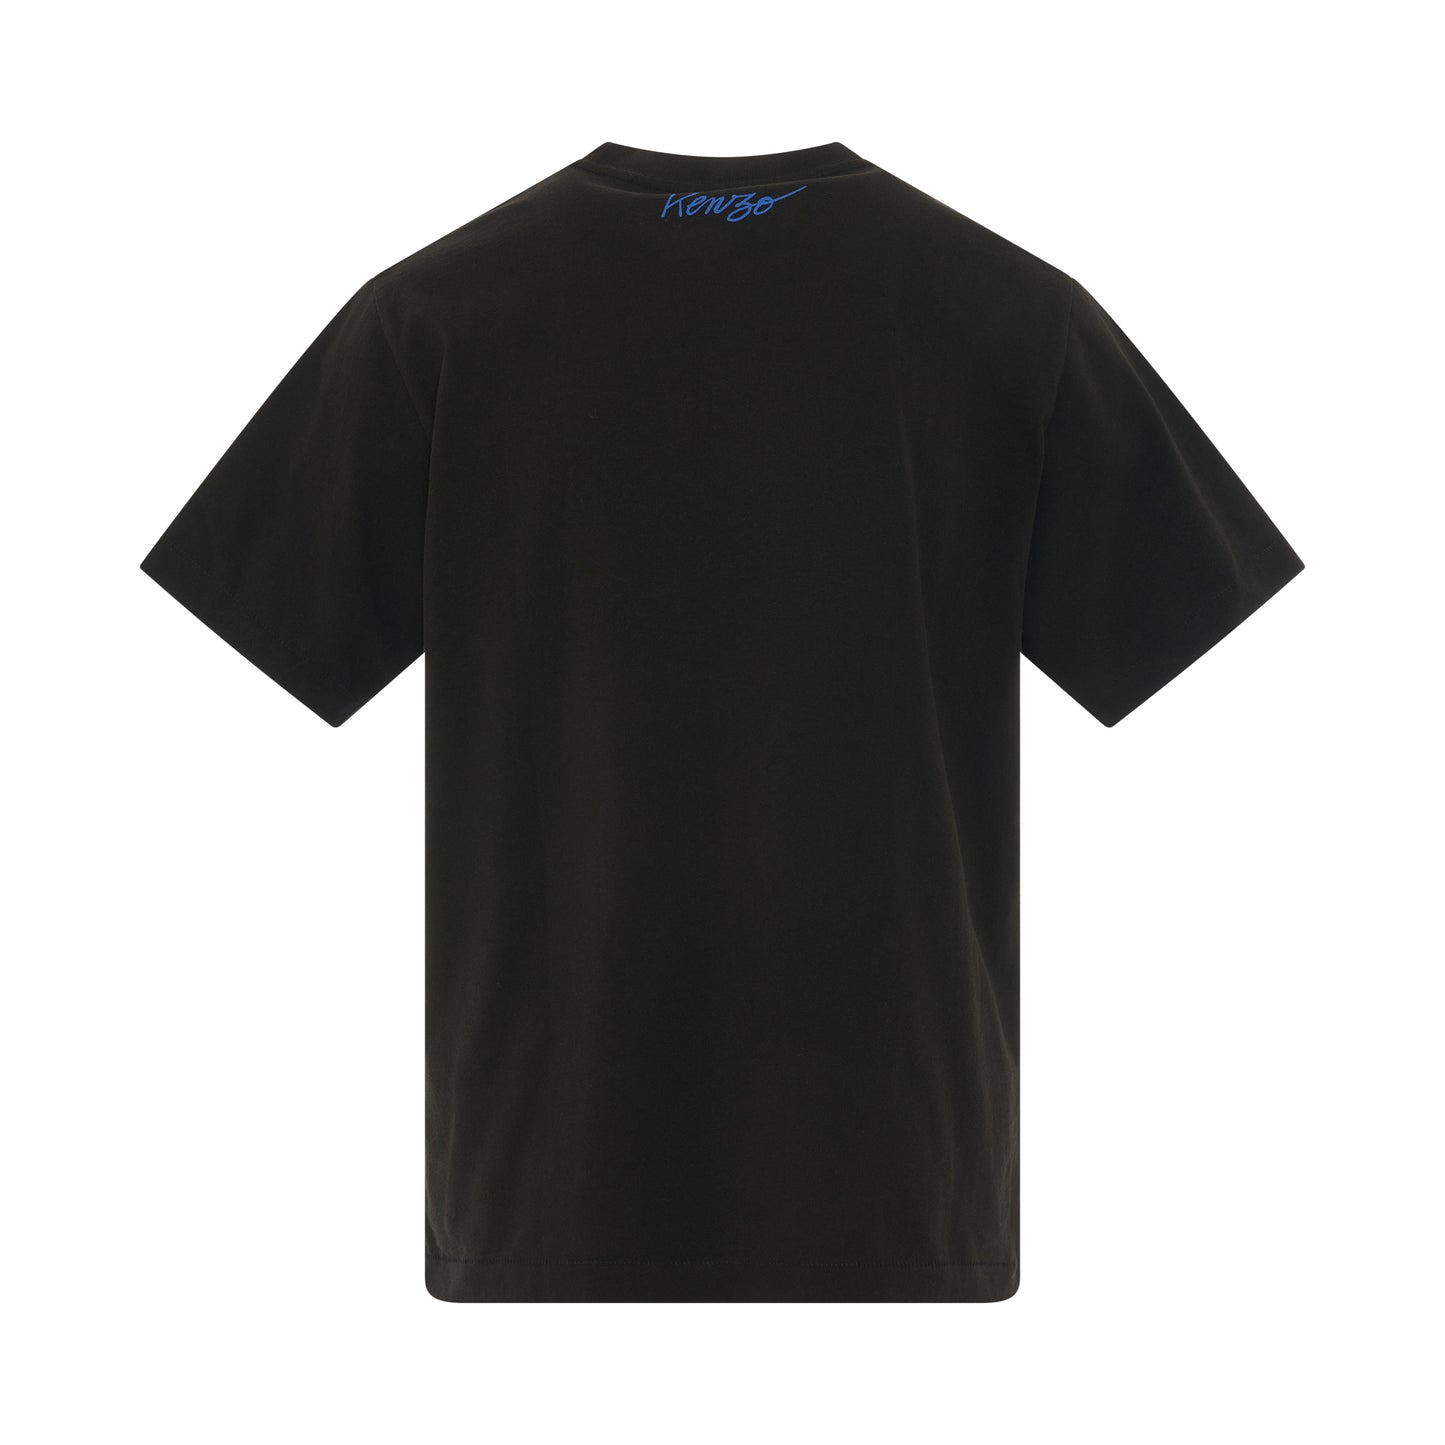 Poppy Print T-Shirt in Black